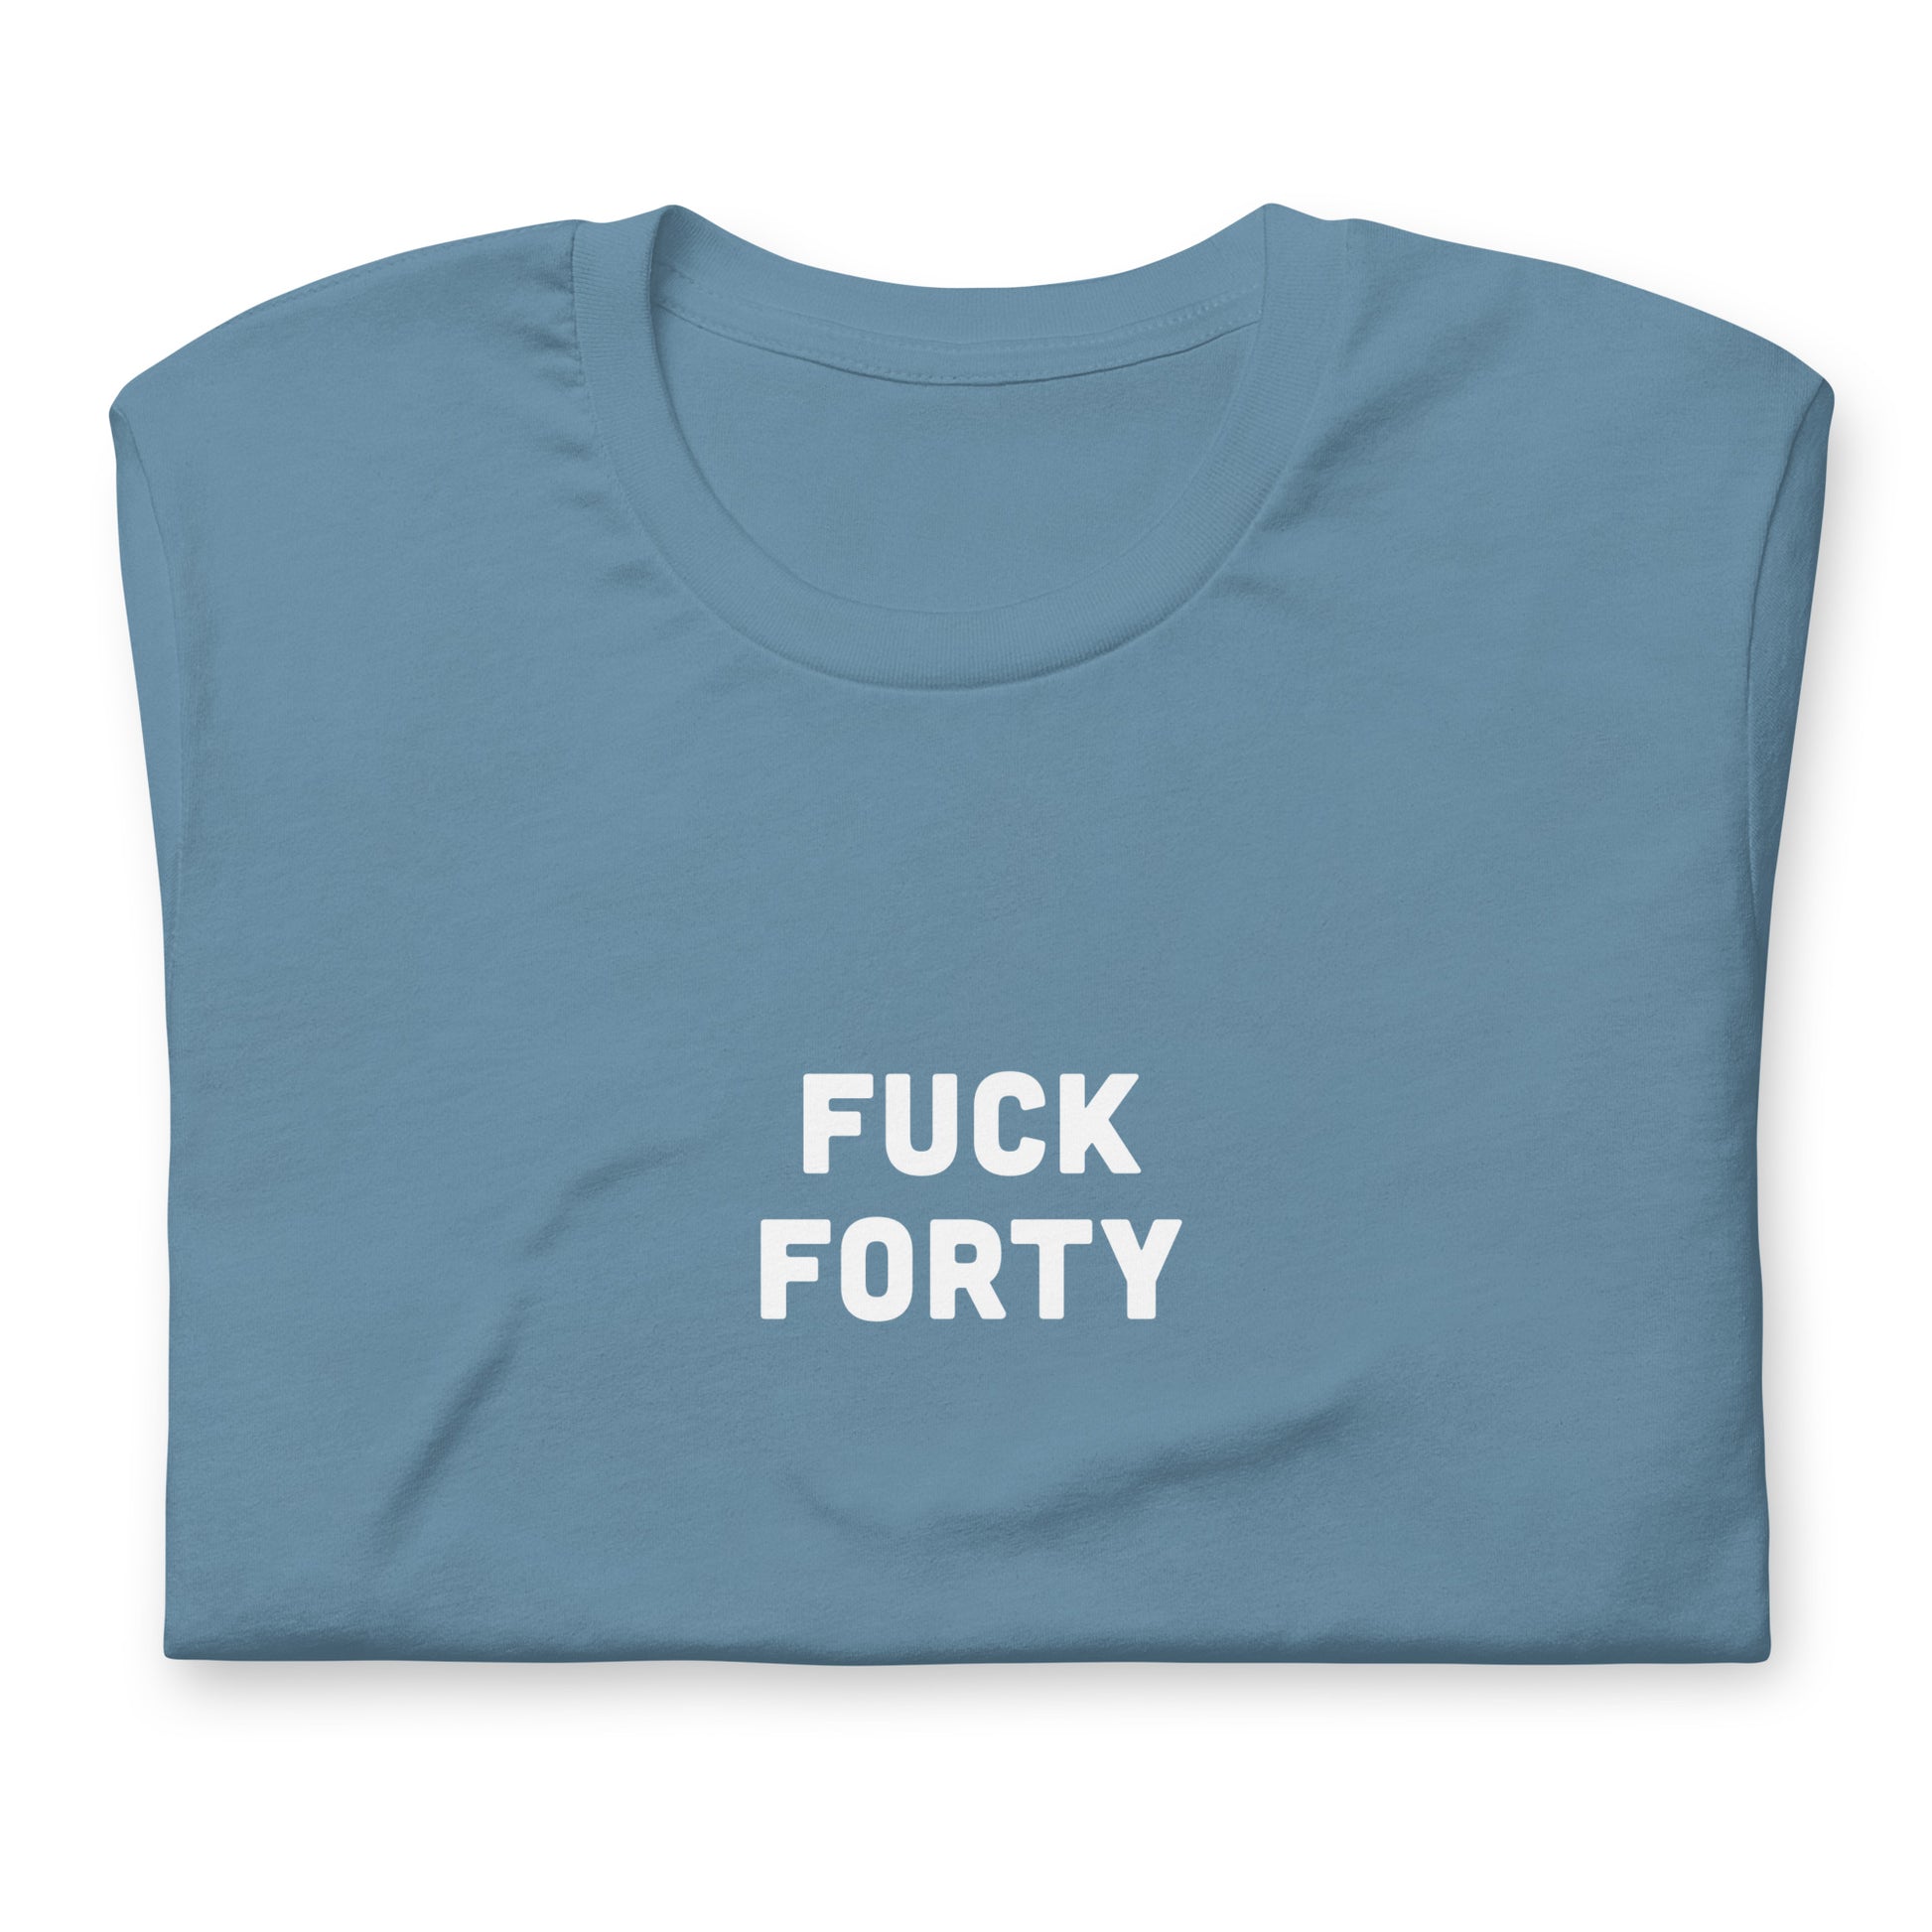 Fuck 40 T-Shirt Size M Color Forest